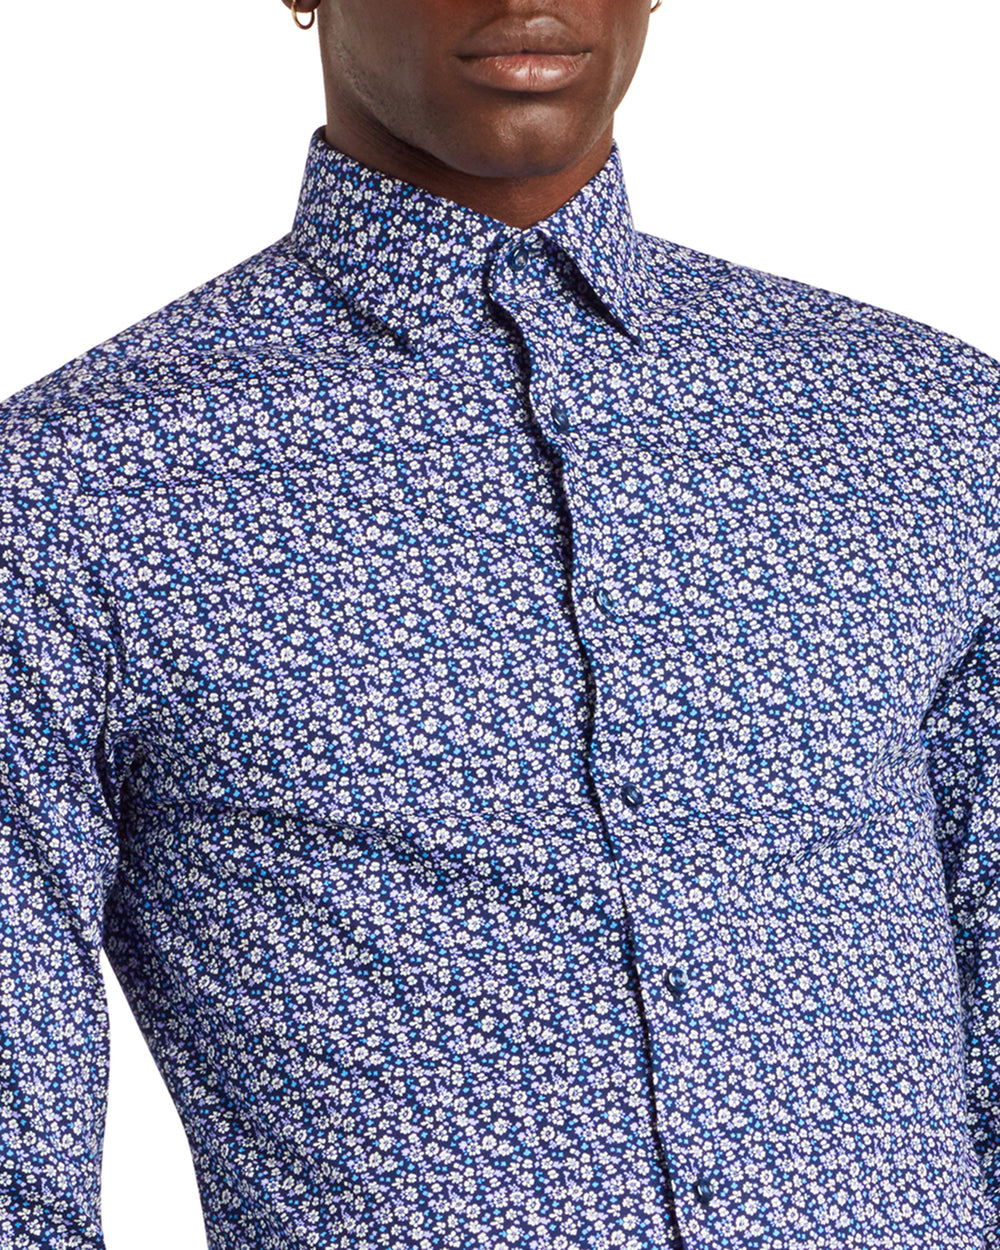 Floral Print Slim Fit Dress Shirt - Lavender & Blue